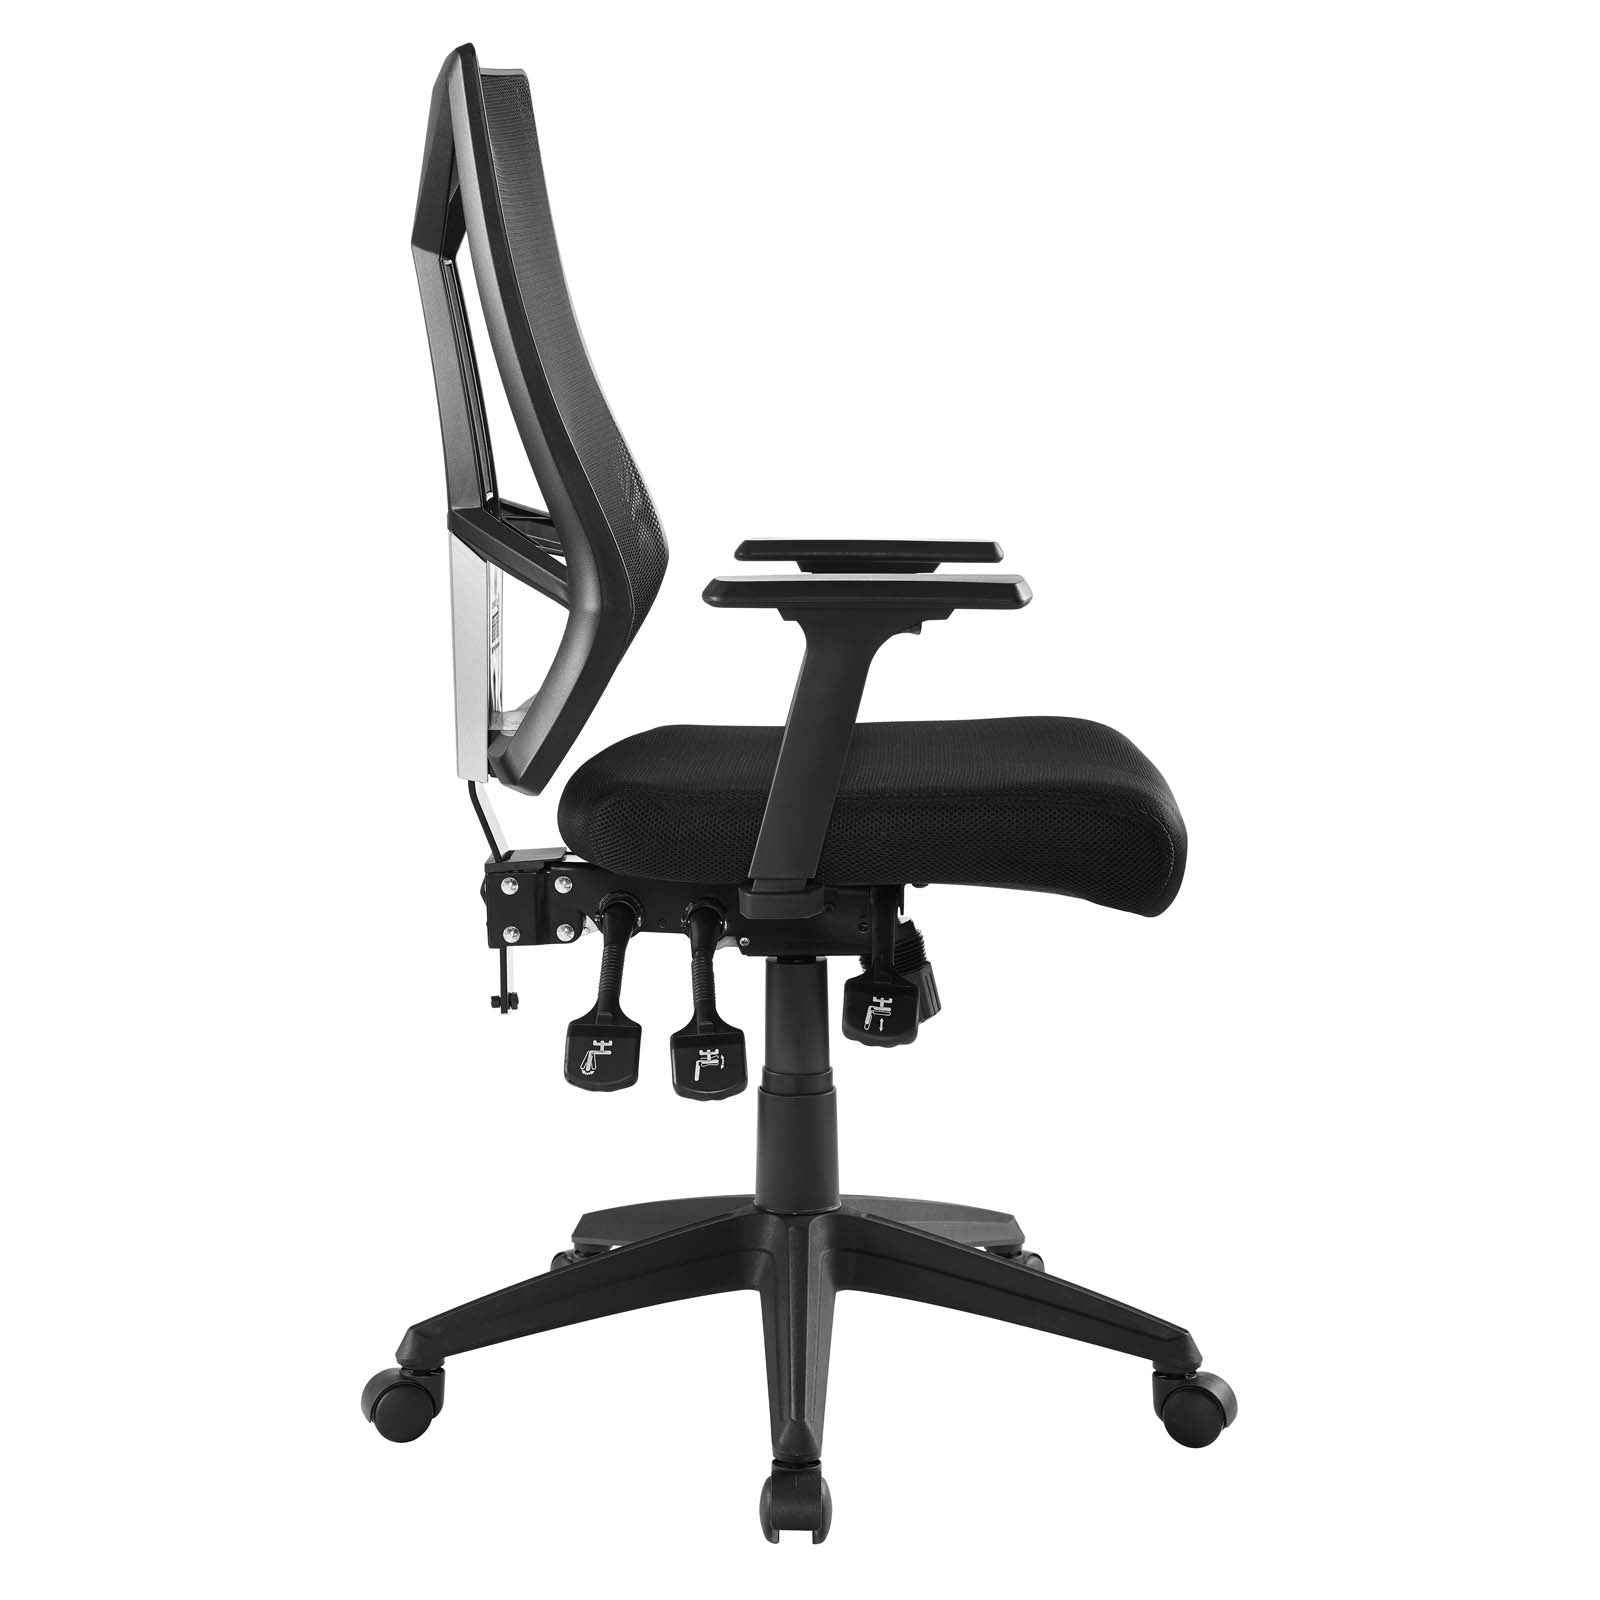 Factor Mesh Office Chair